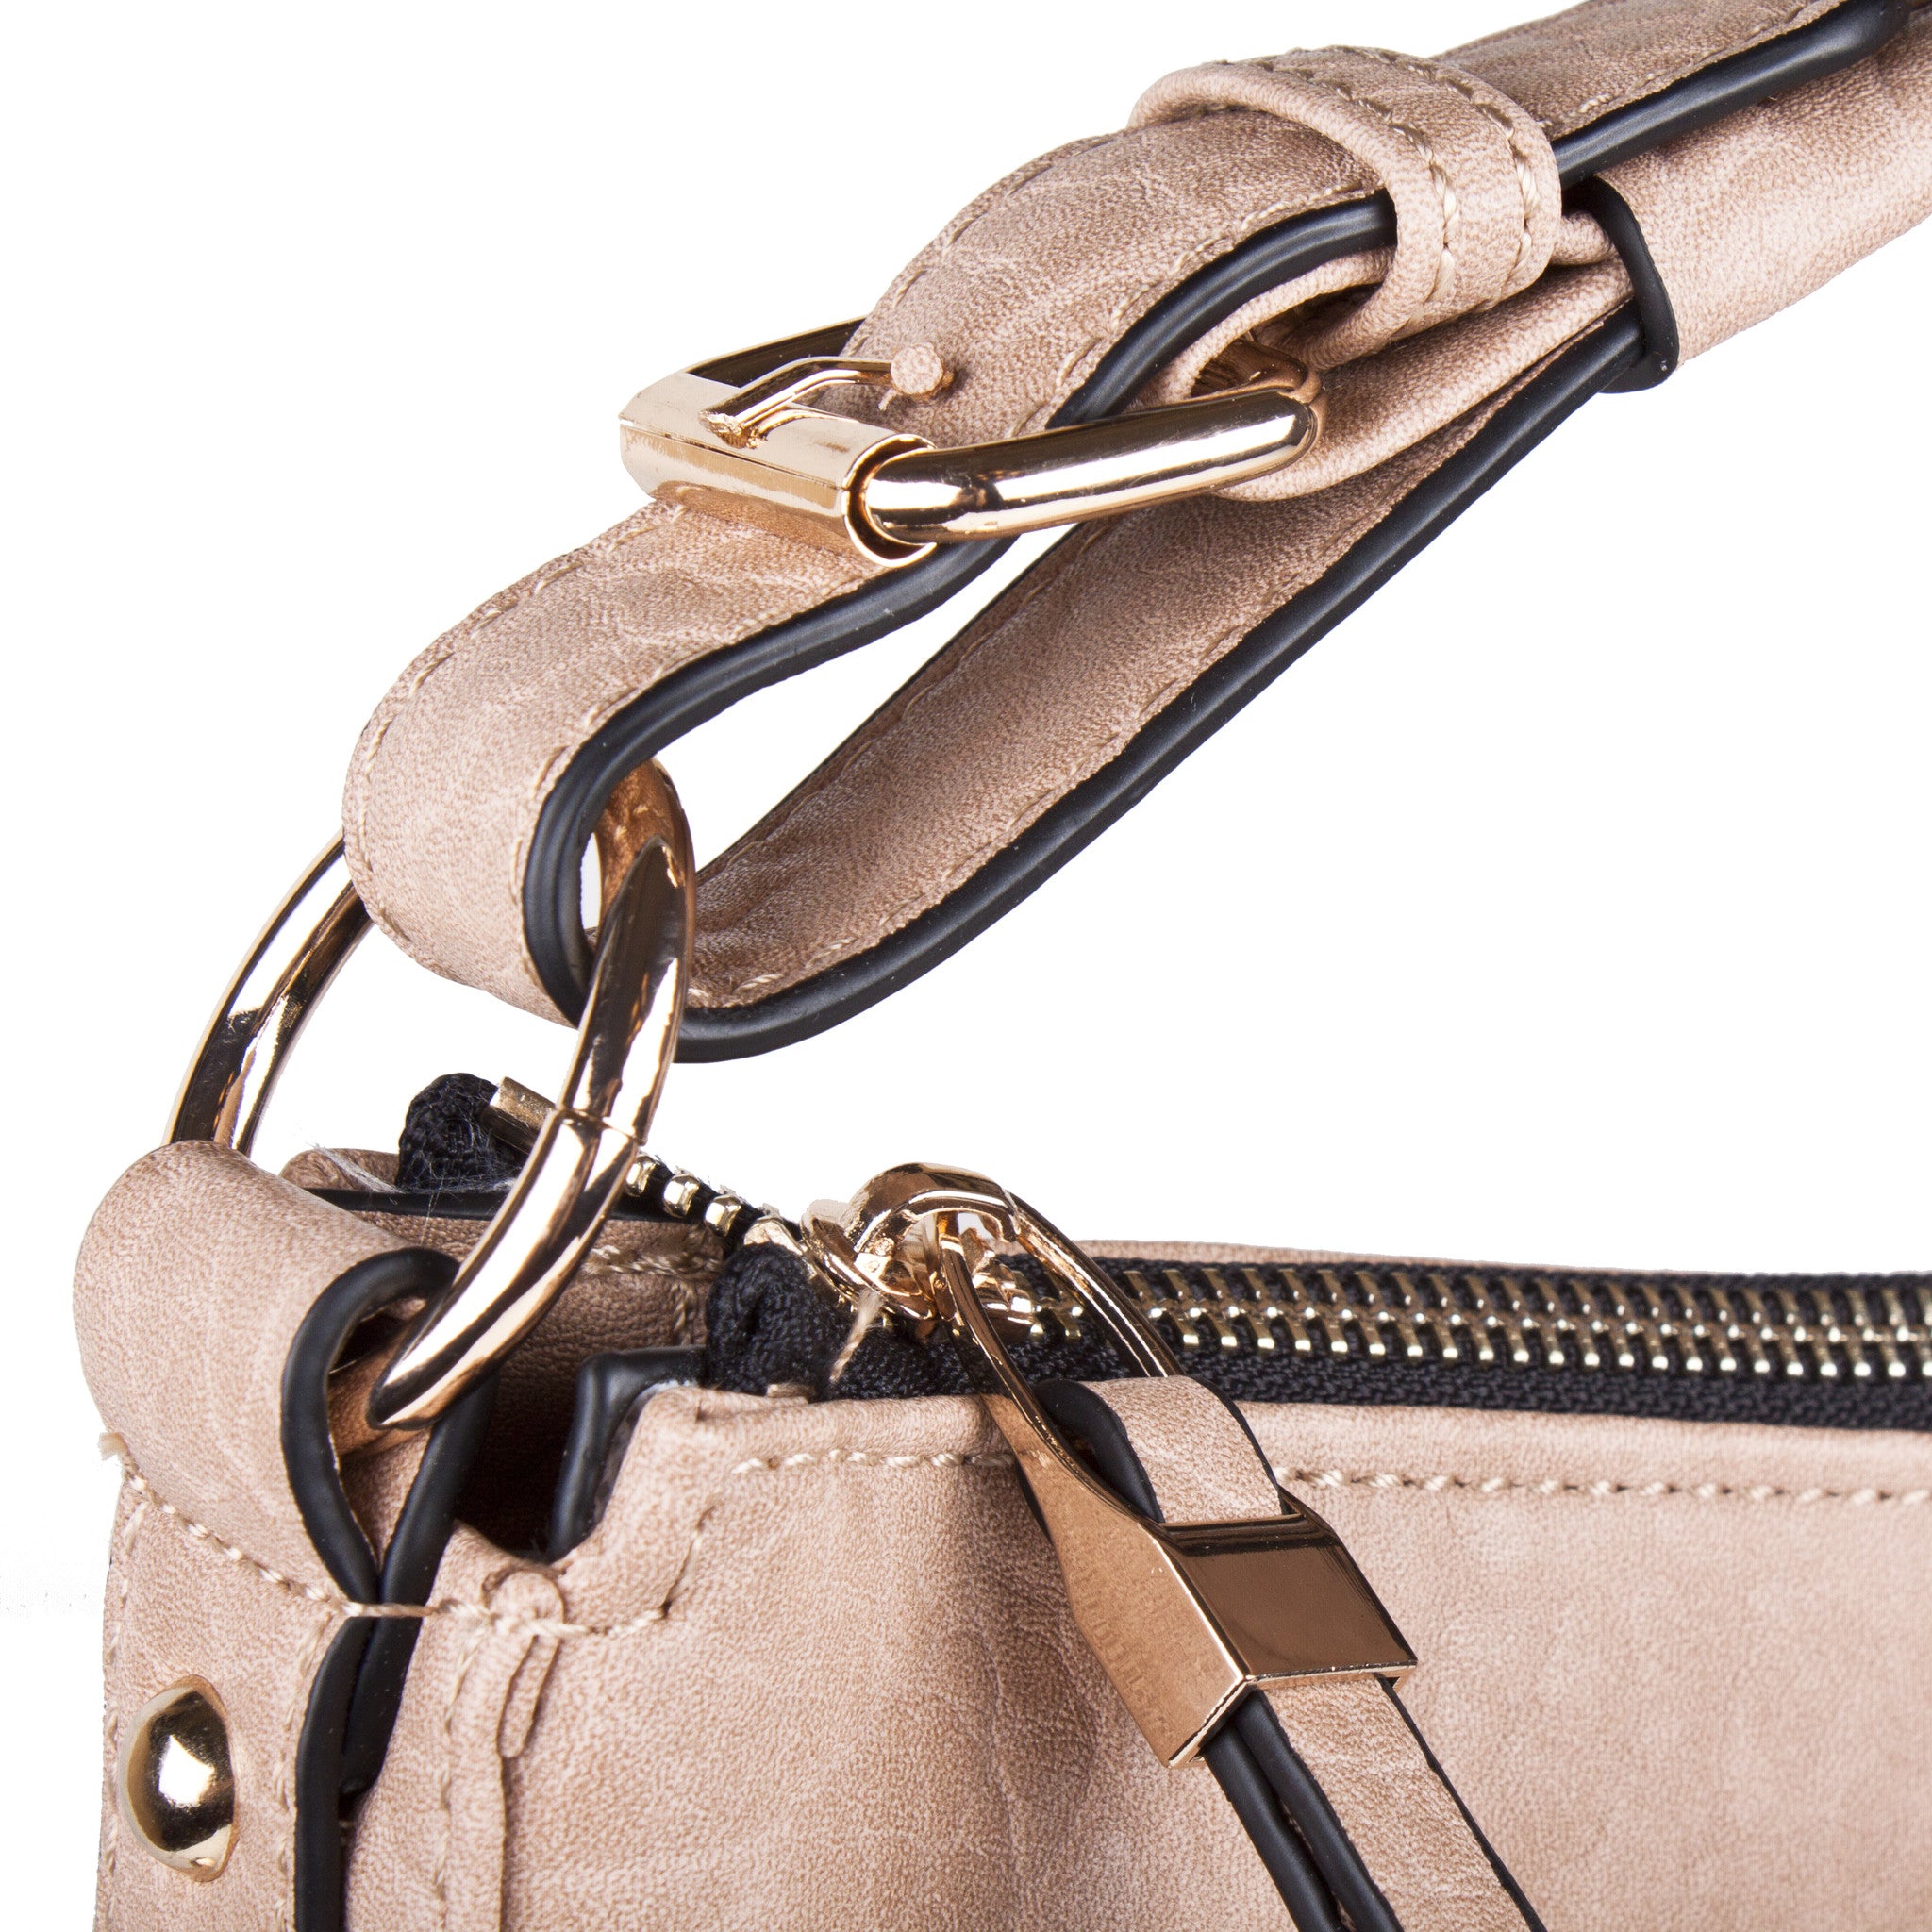 Moda Luxe Teal Van Shoulder Bag, Best Price and Reviews